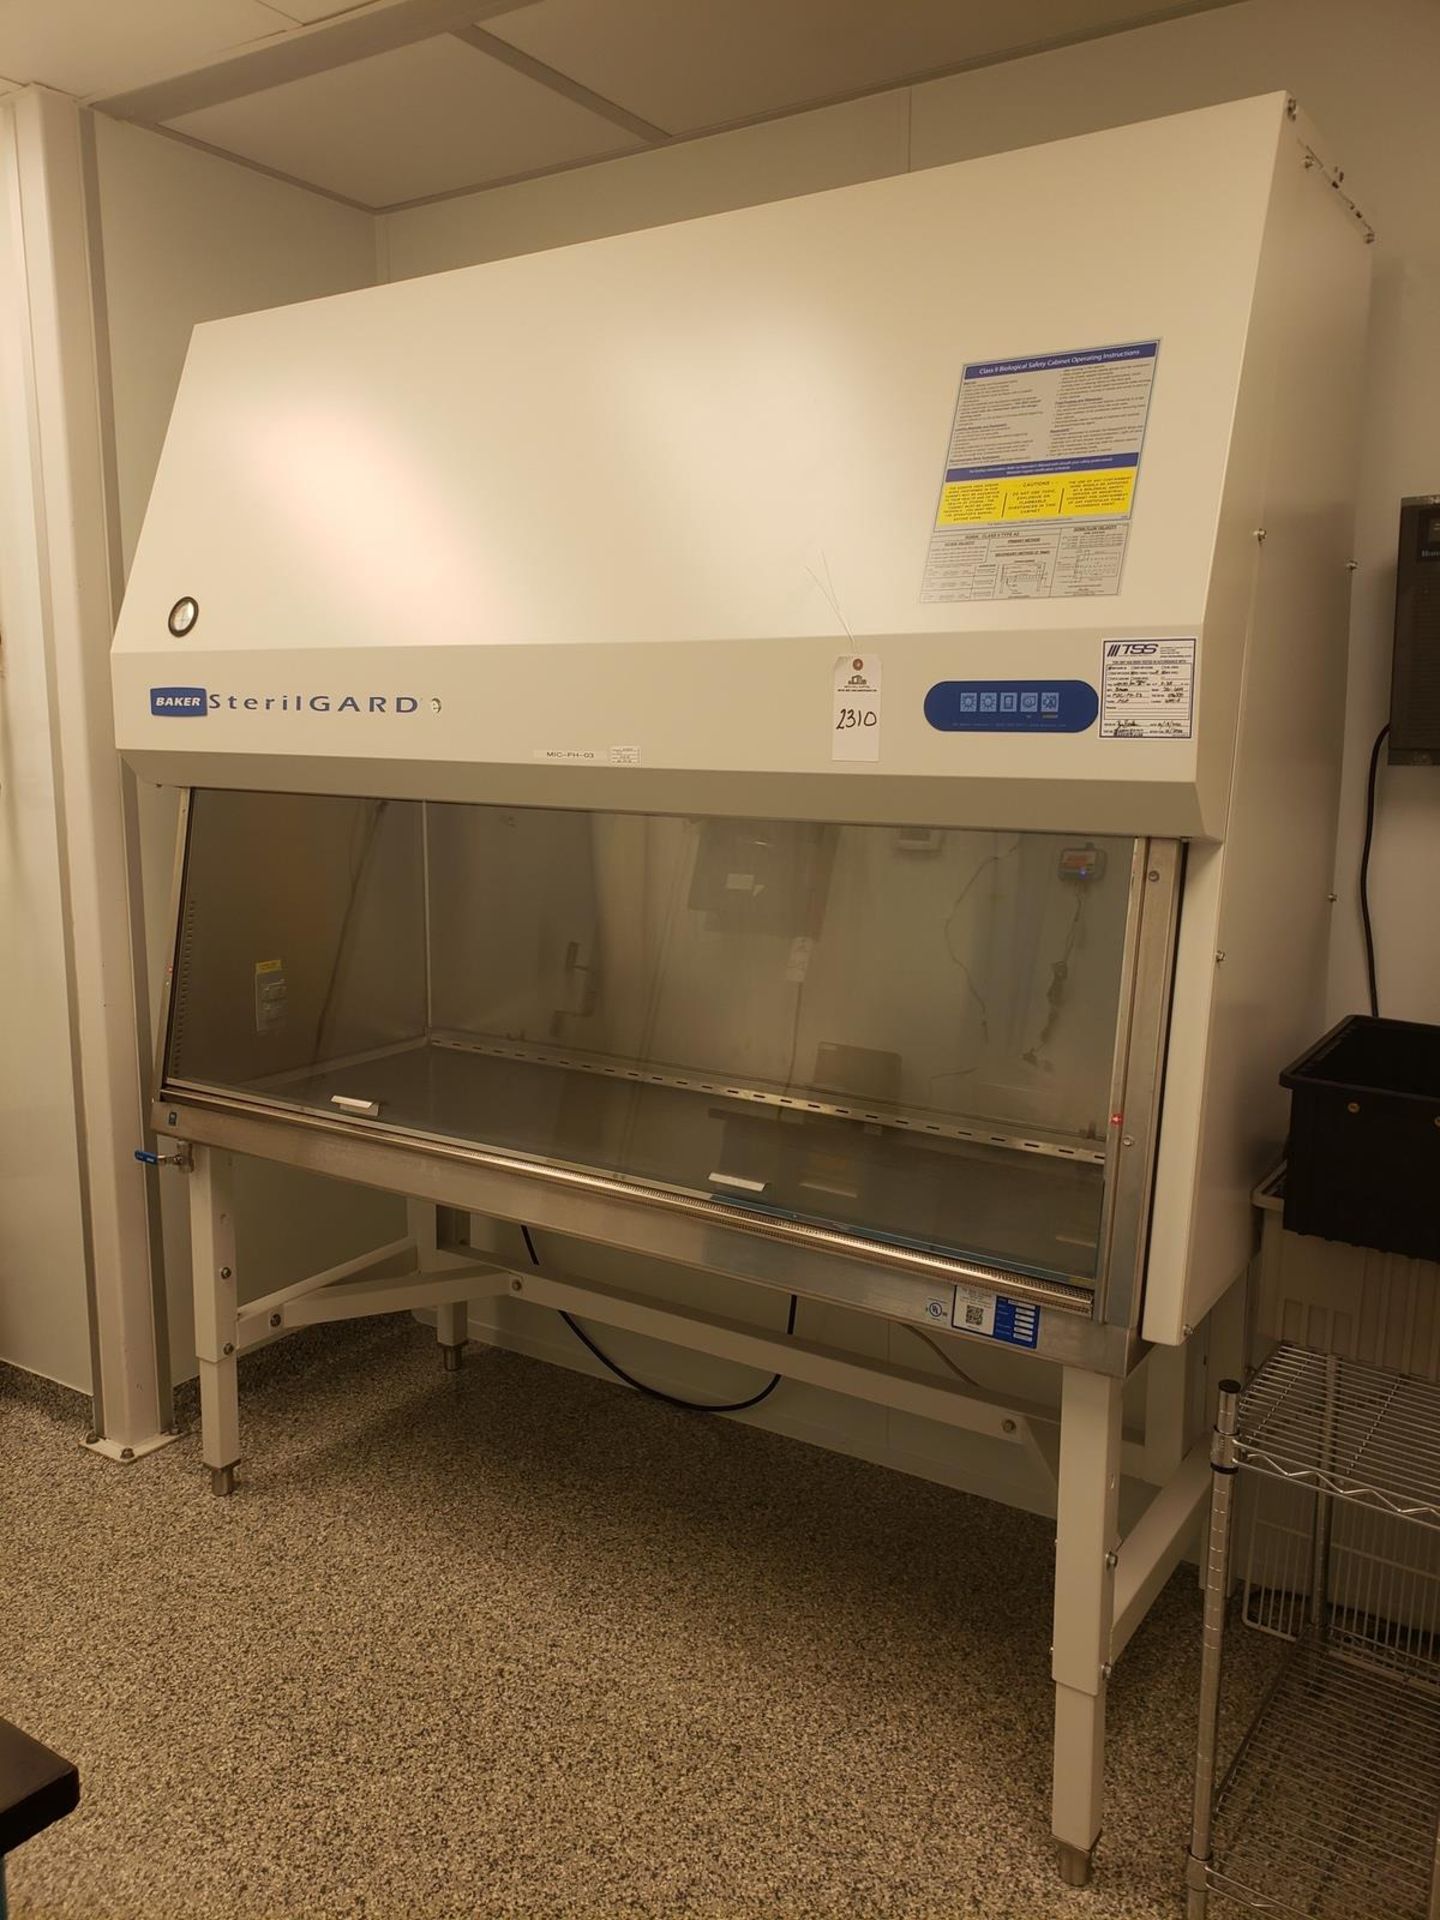 Baker SterilGARD Biosafety Cabinet, M# SG604, S/N 123383